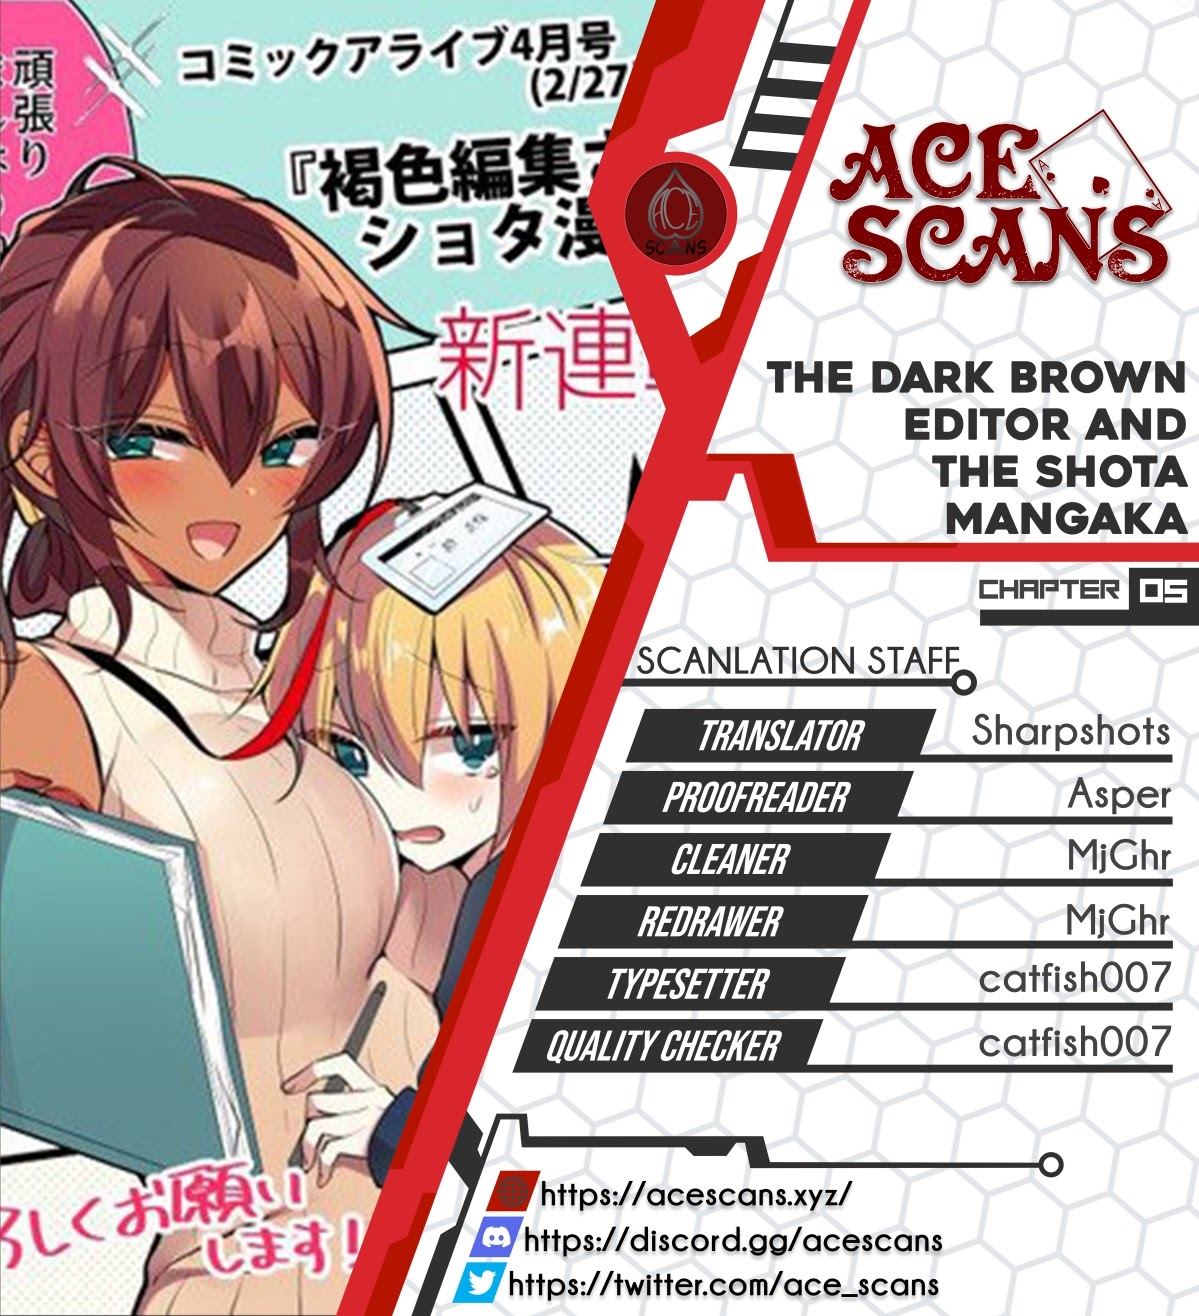 The Dark Brown Editor And The Shota Mangaka - Page 1